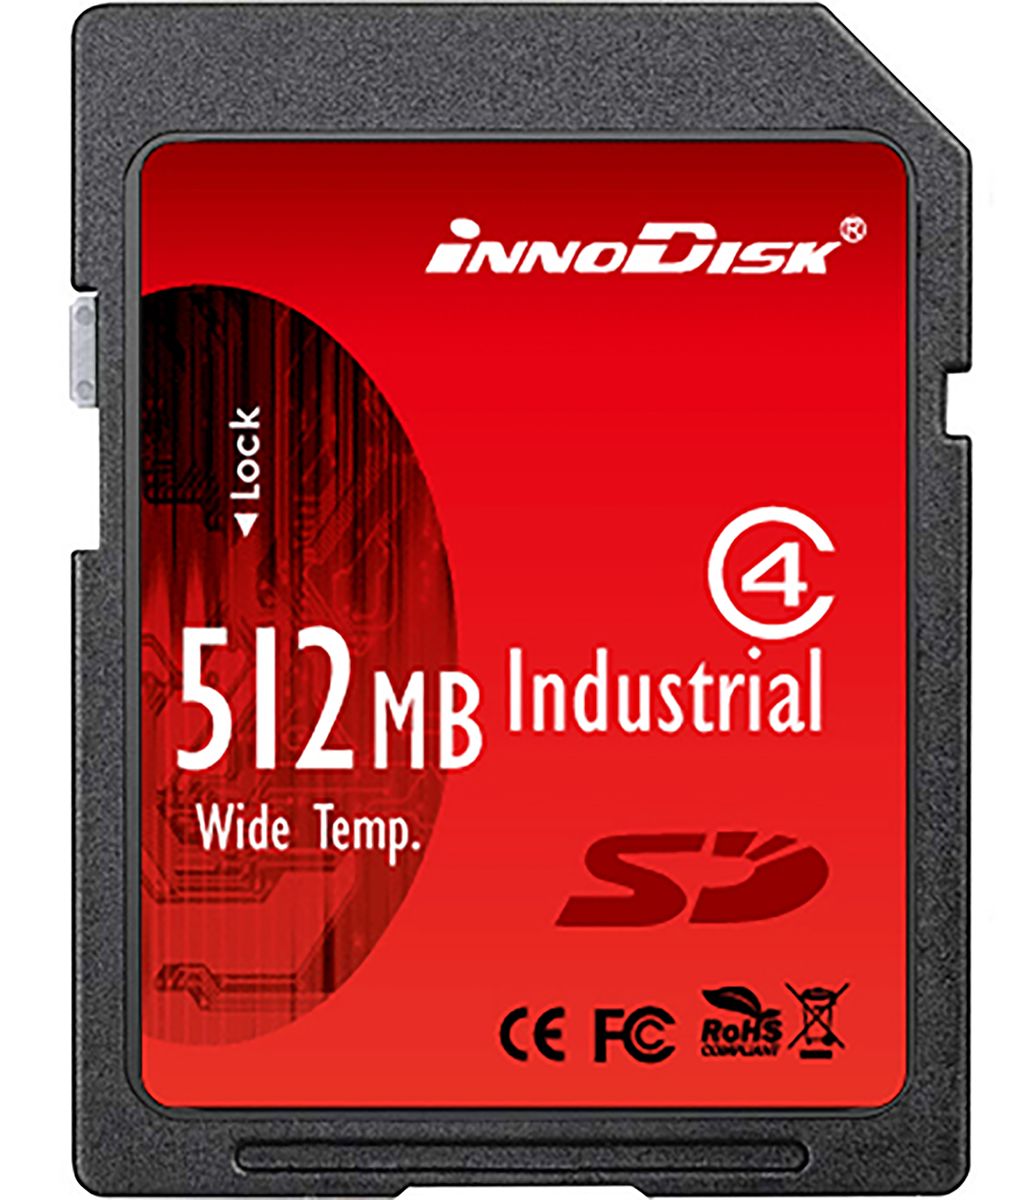 InnoDisk 512 MB Industrial SD SD Card, Class 6